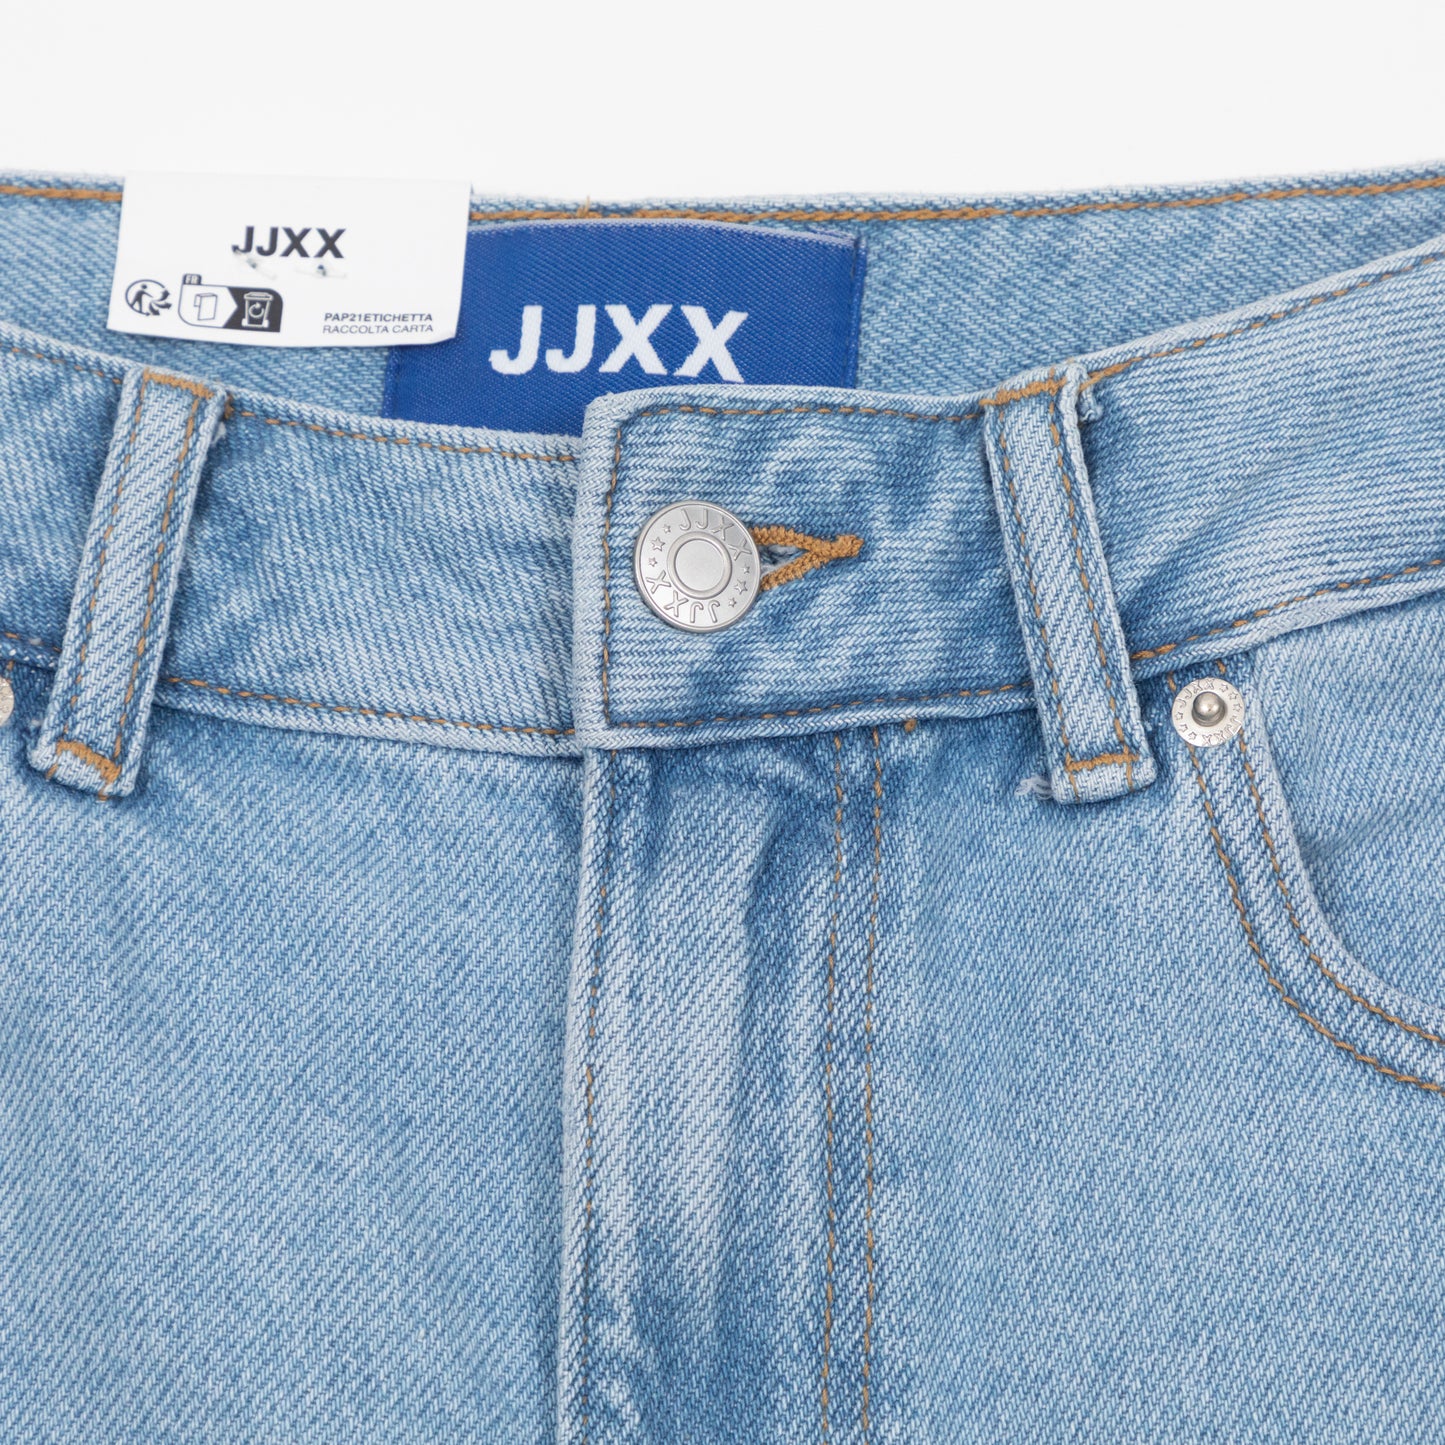 Womens JJXX Baggy Long Denim Shorts in BLUE